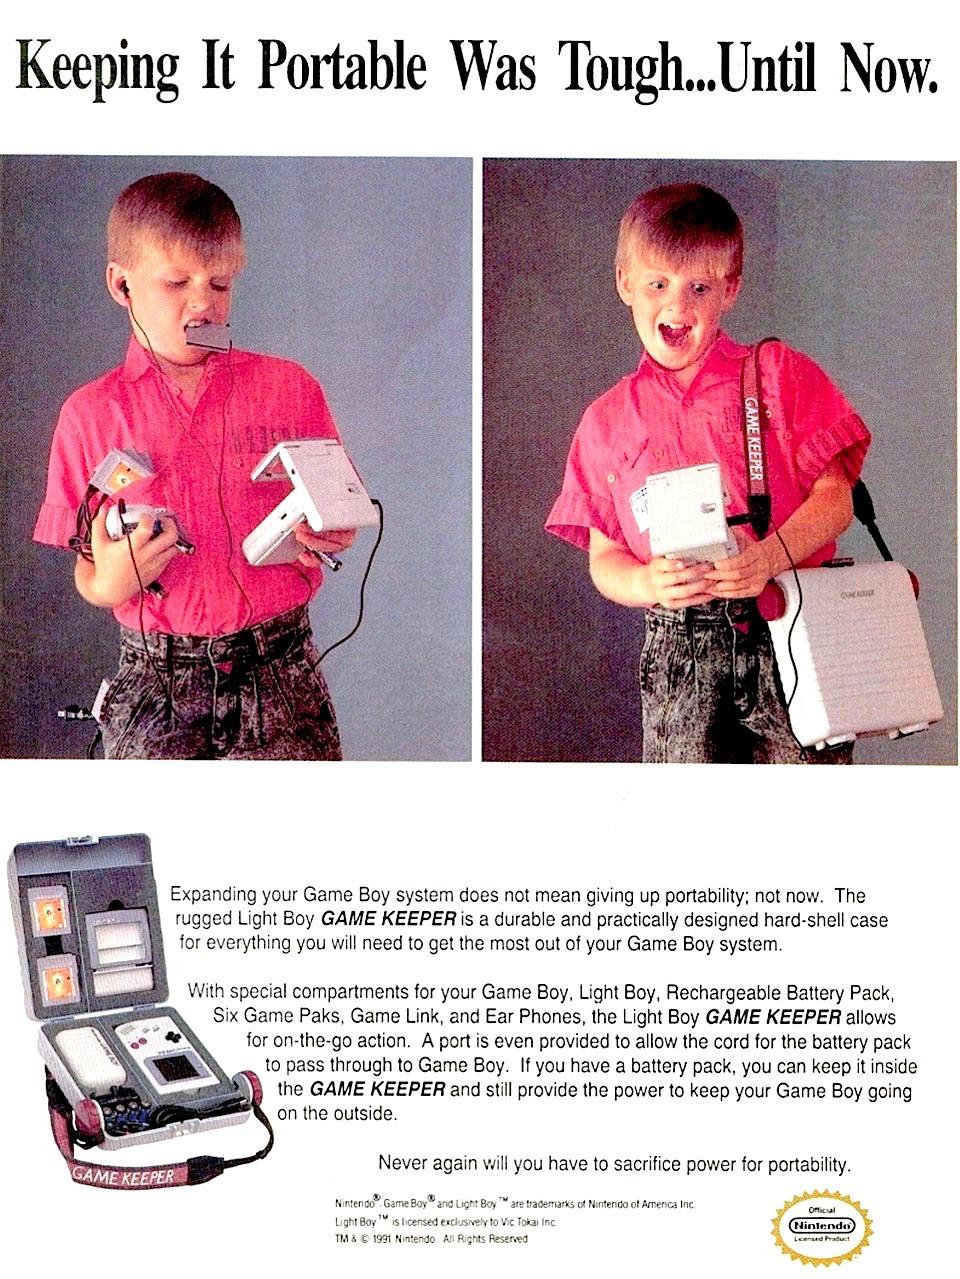 Nintendo, 1991